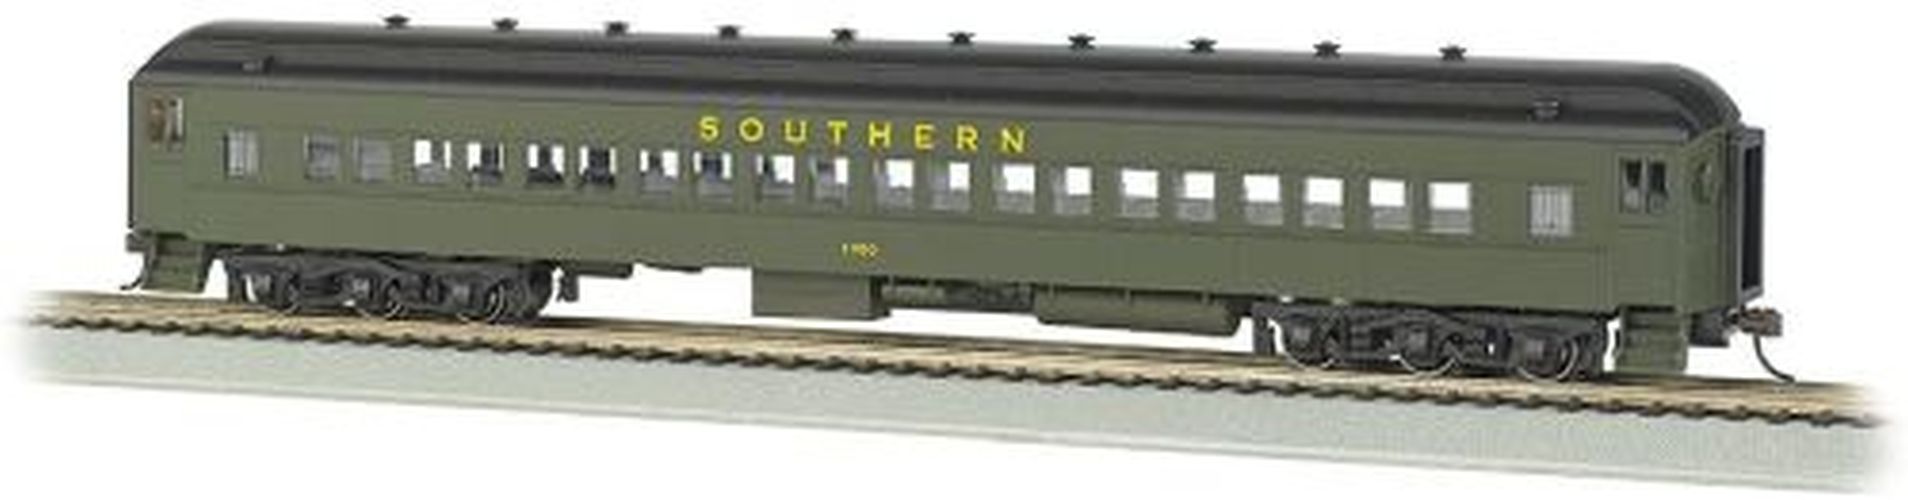 BACHMANN Southern Pacific 72 Heavywight Coach Car Ho Scale - TRAIN